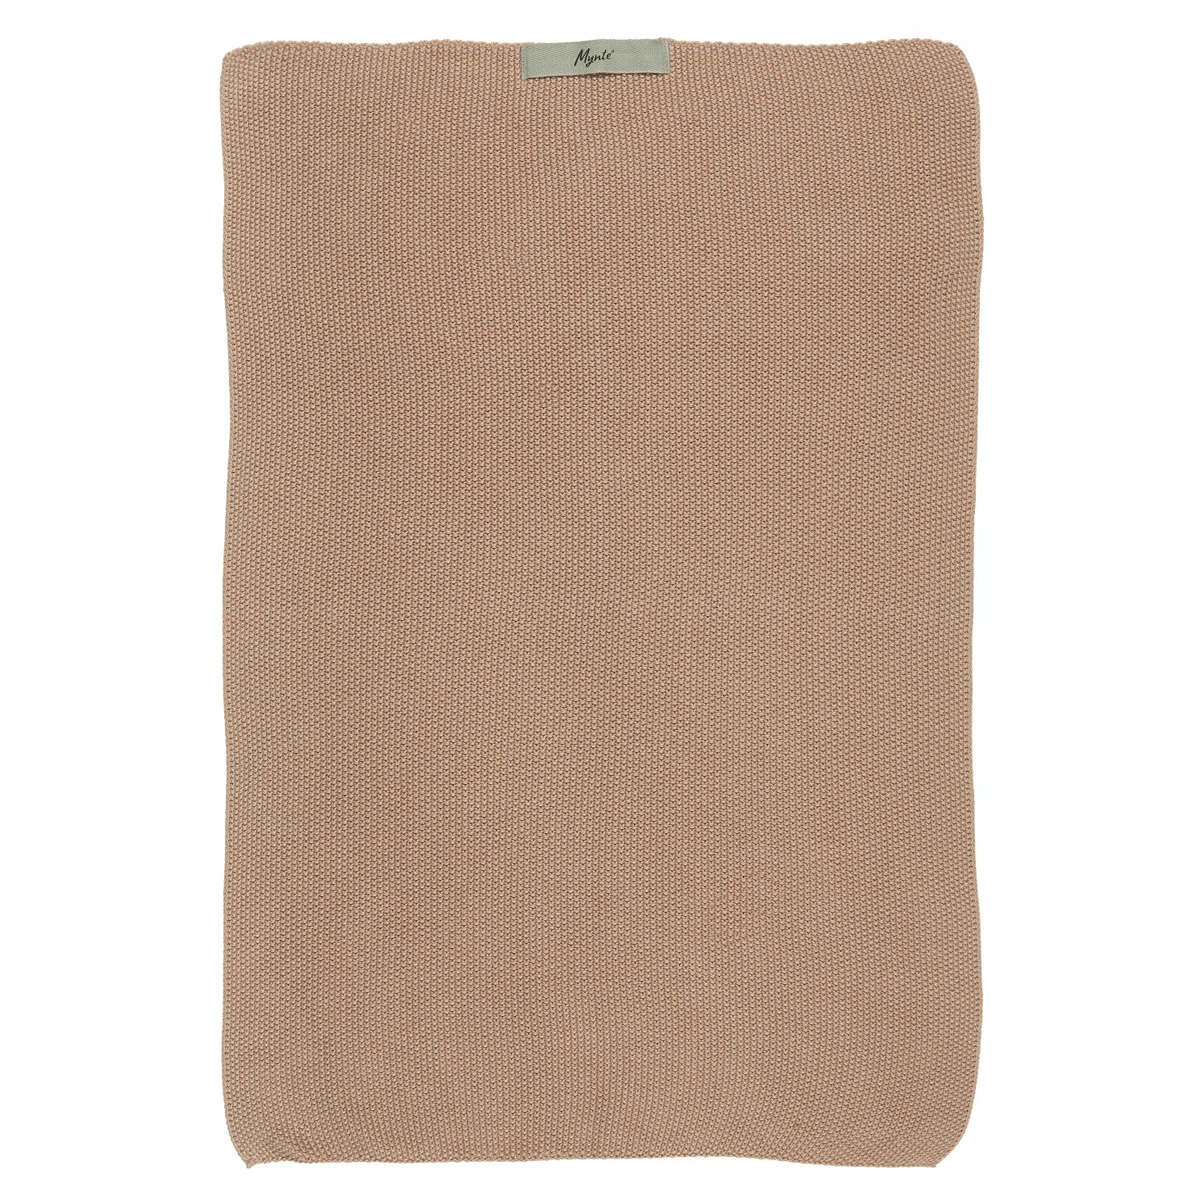 IB Laursen Mynte Towel faded rose knitted